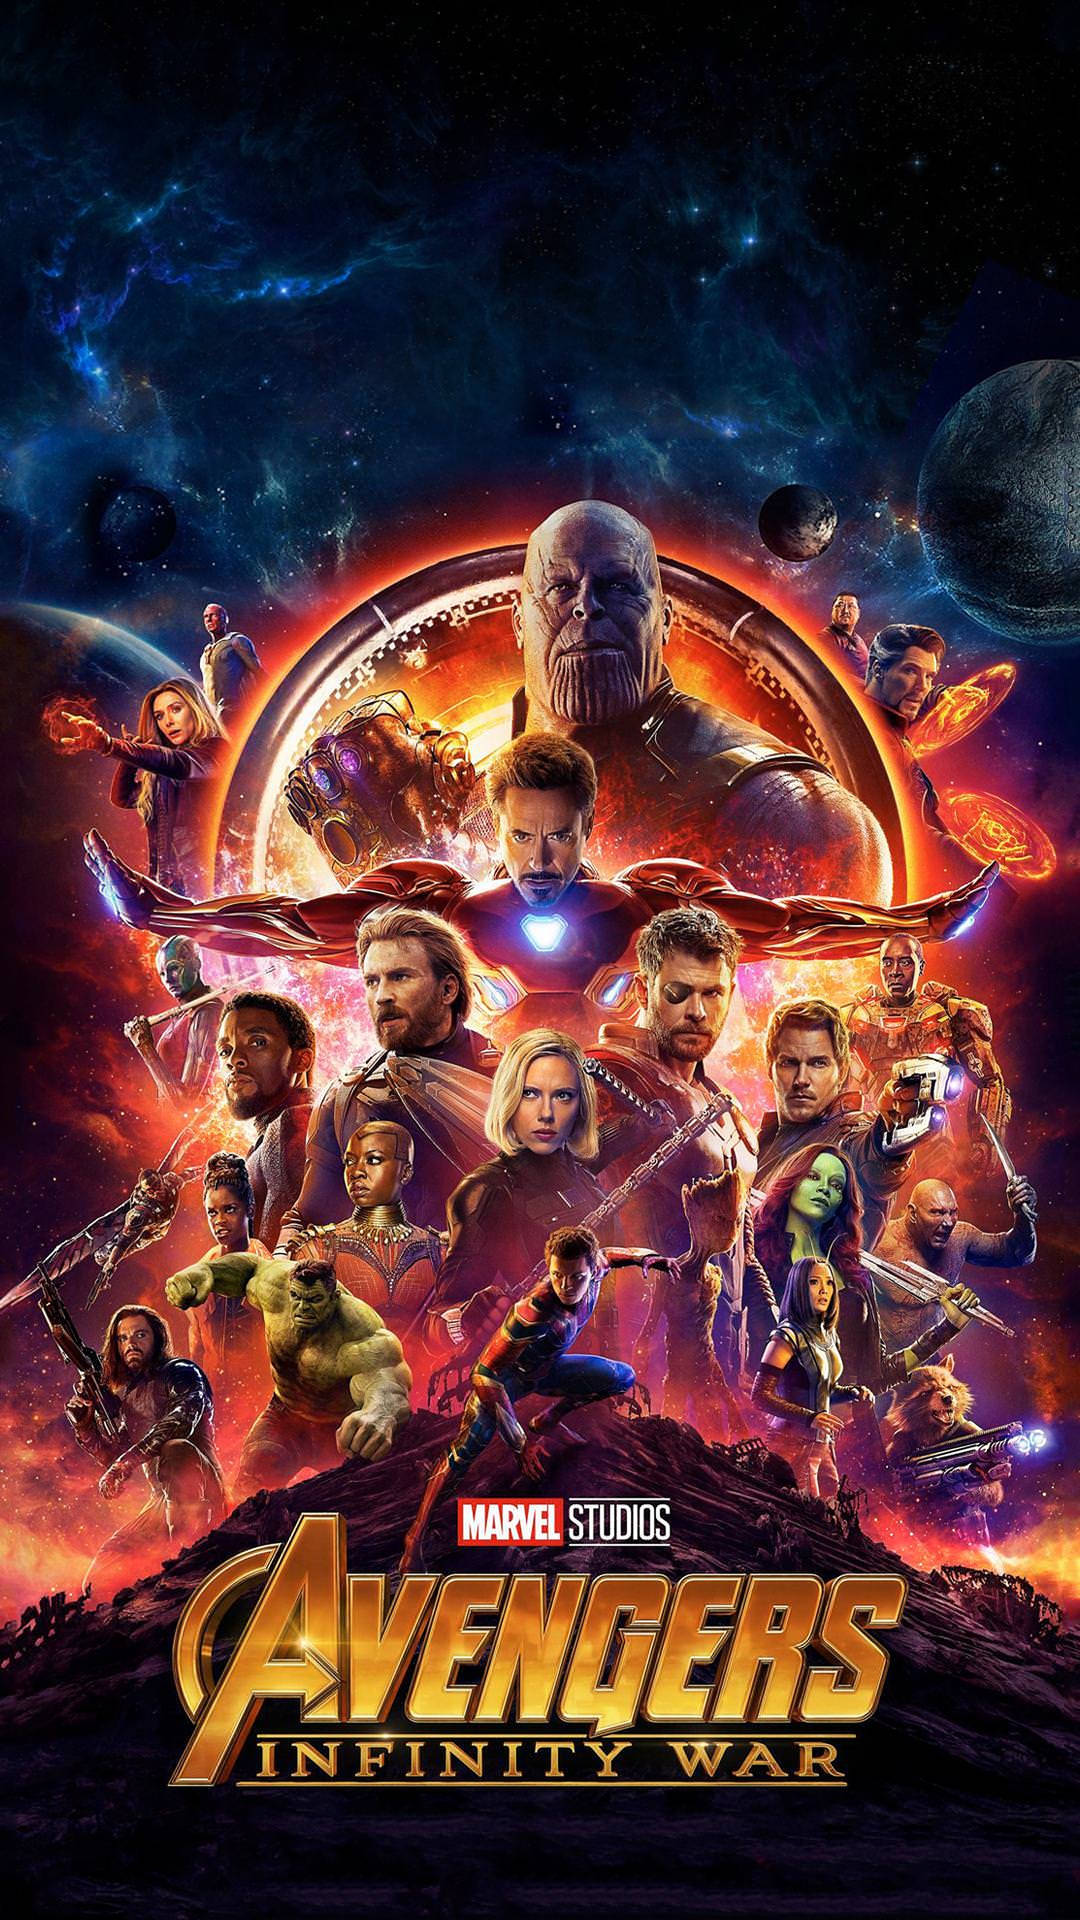 Marvel Studios Avengers Android Infinity War